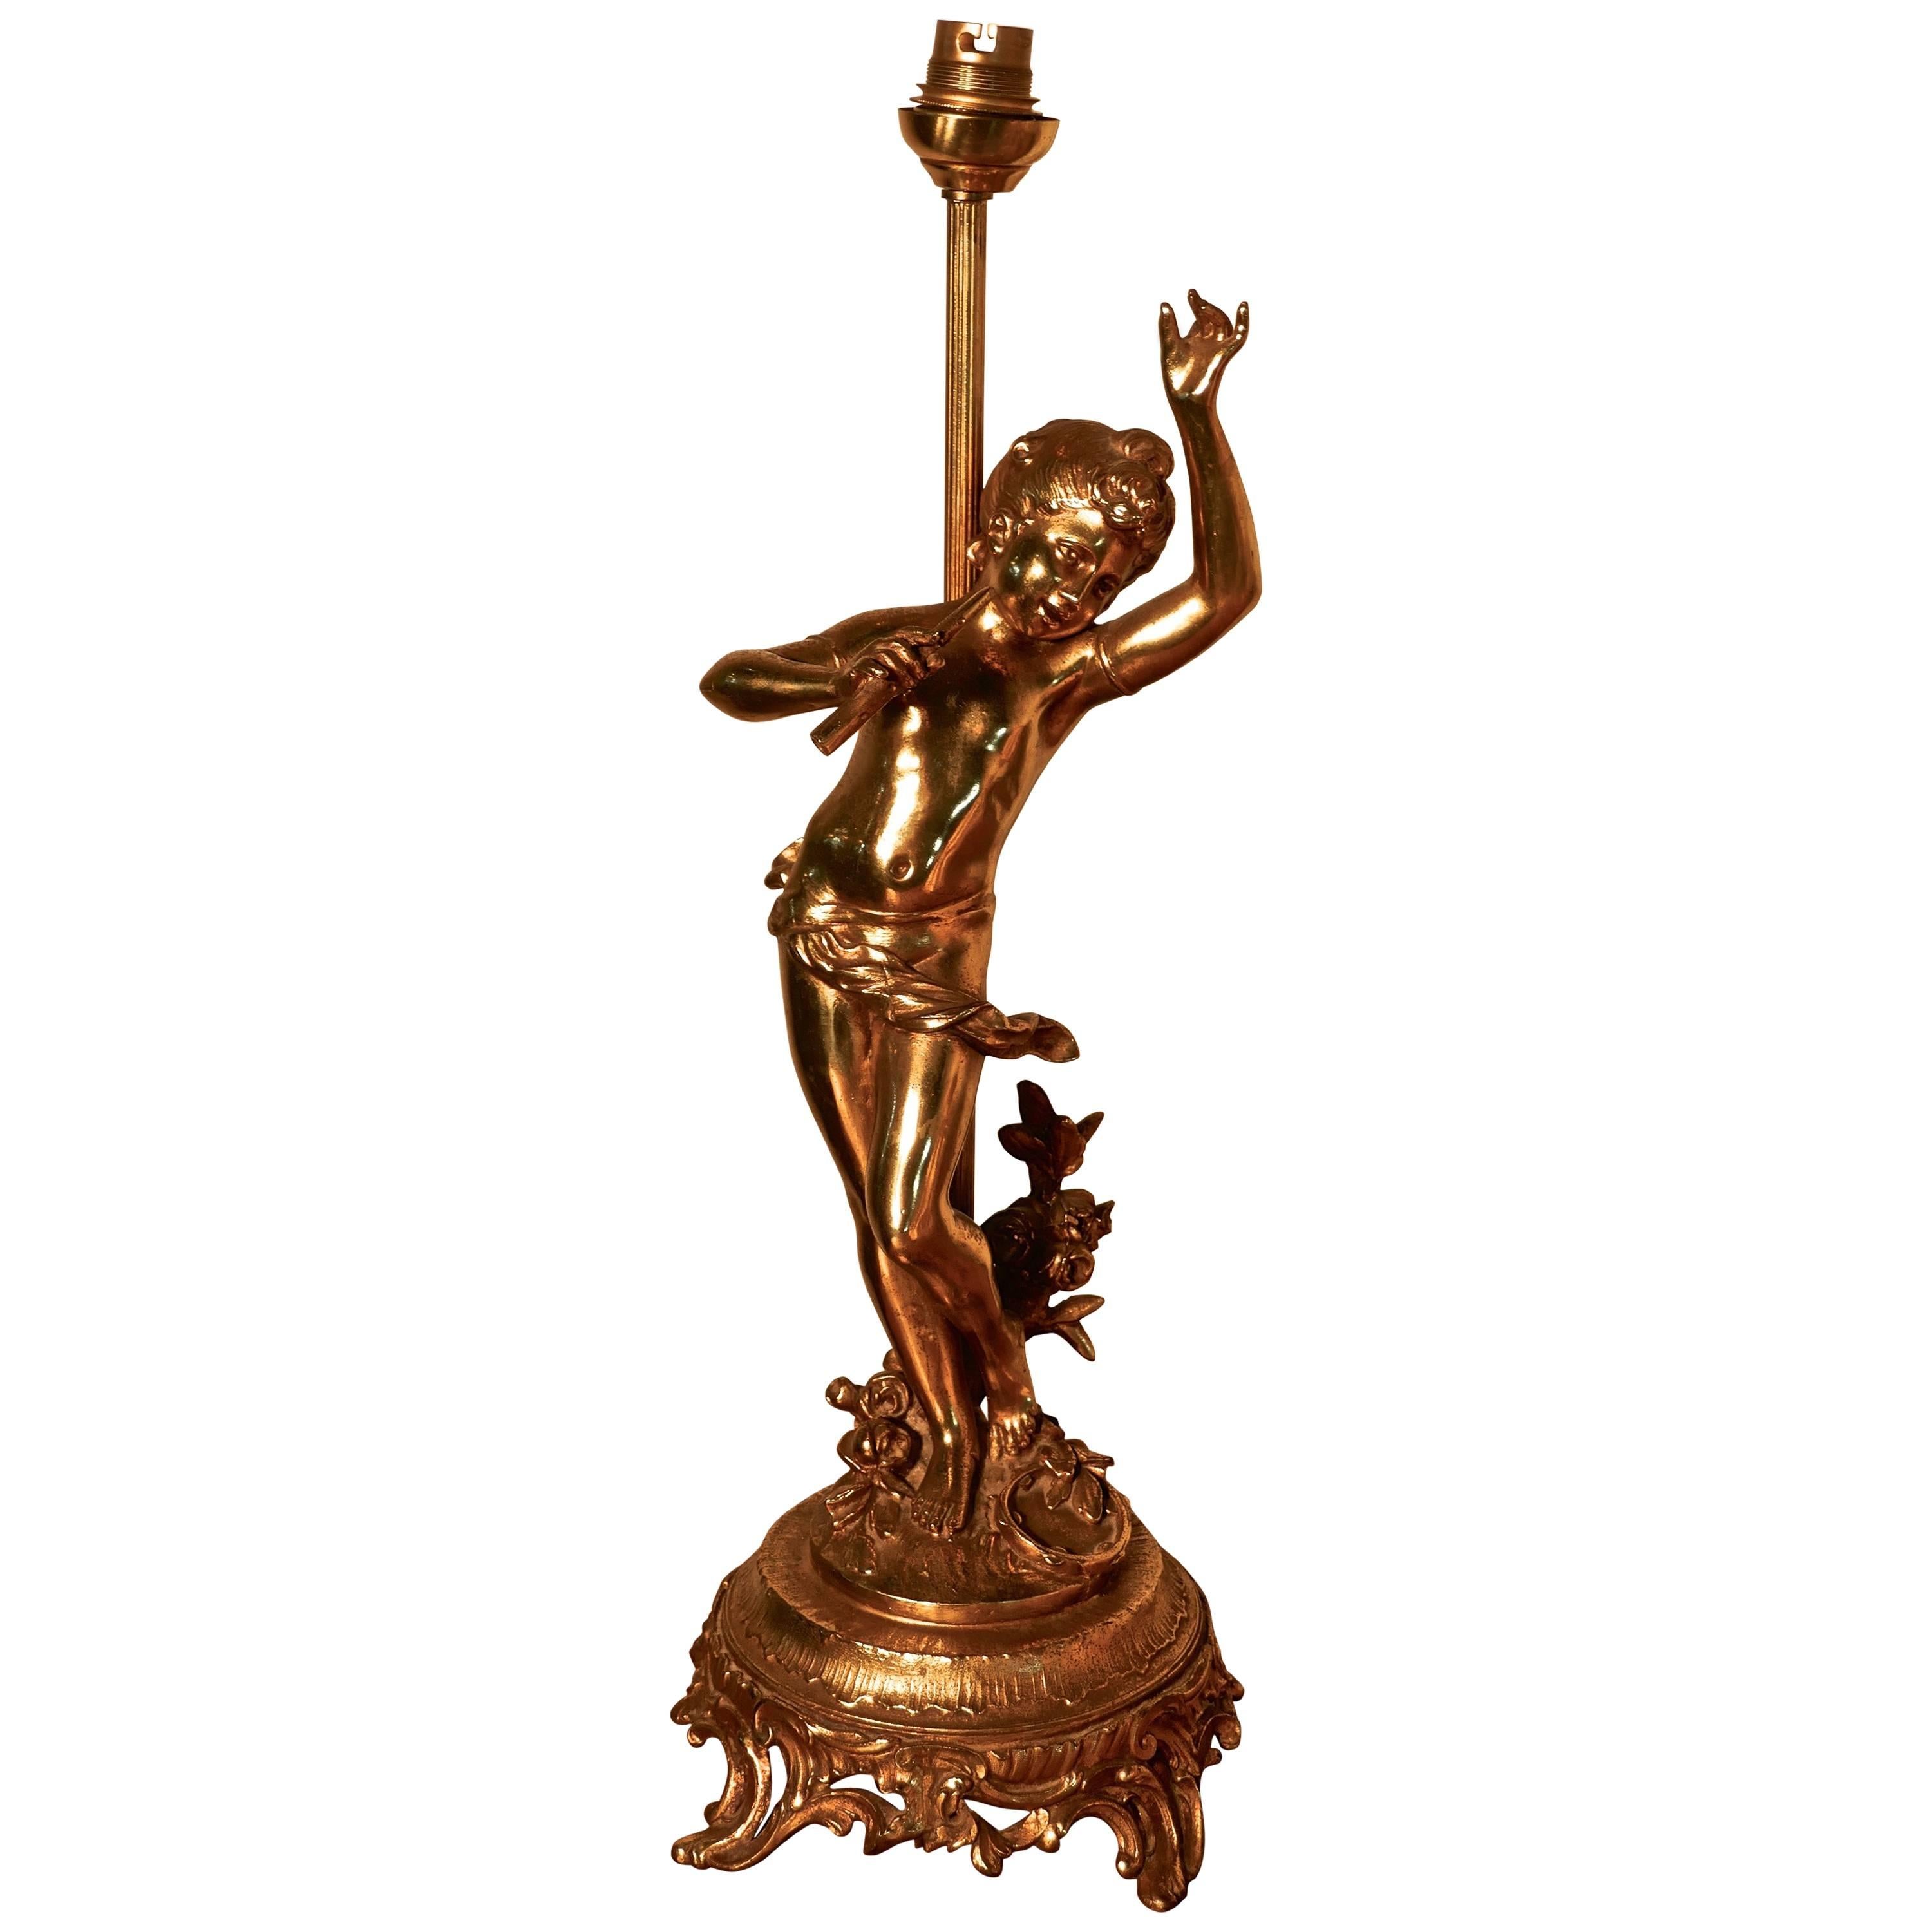  Cherub or Putti Musician, Brass Table Lamp